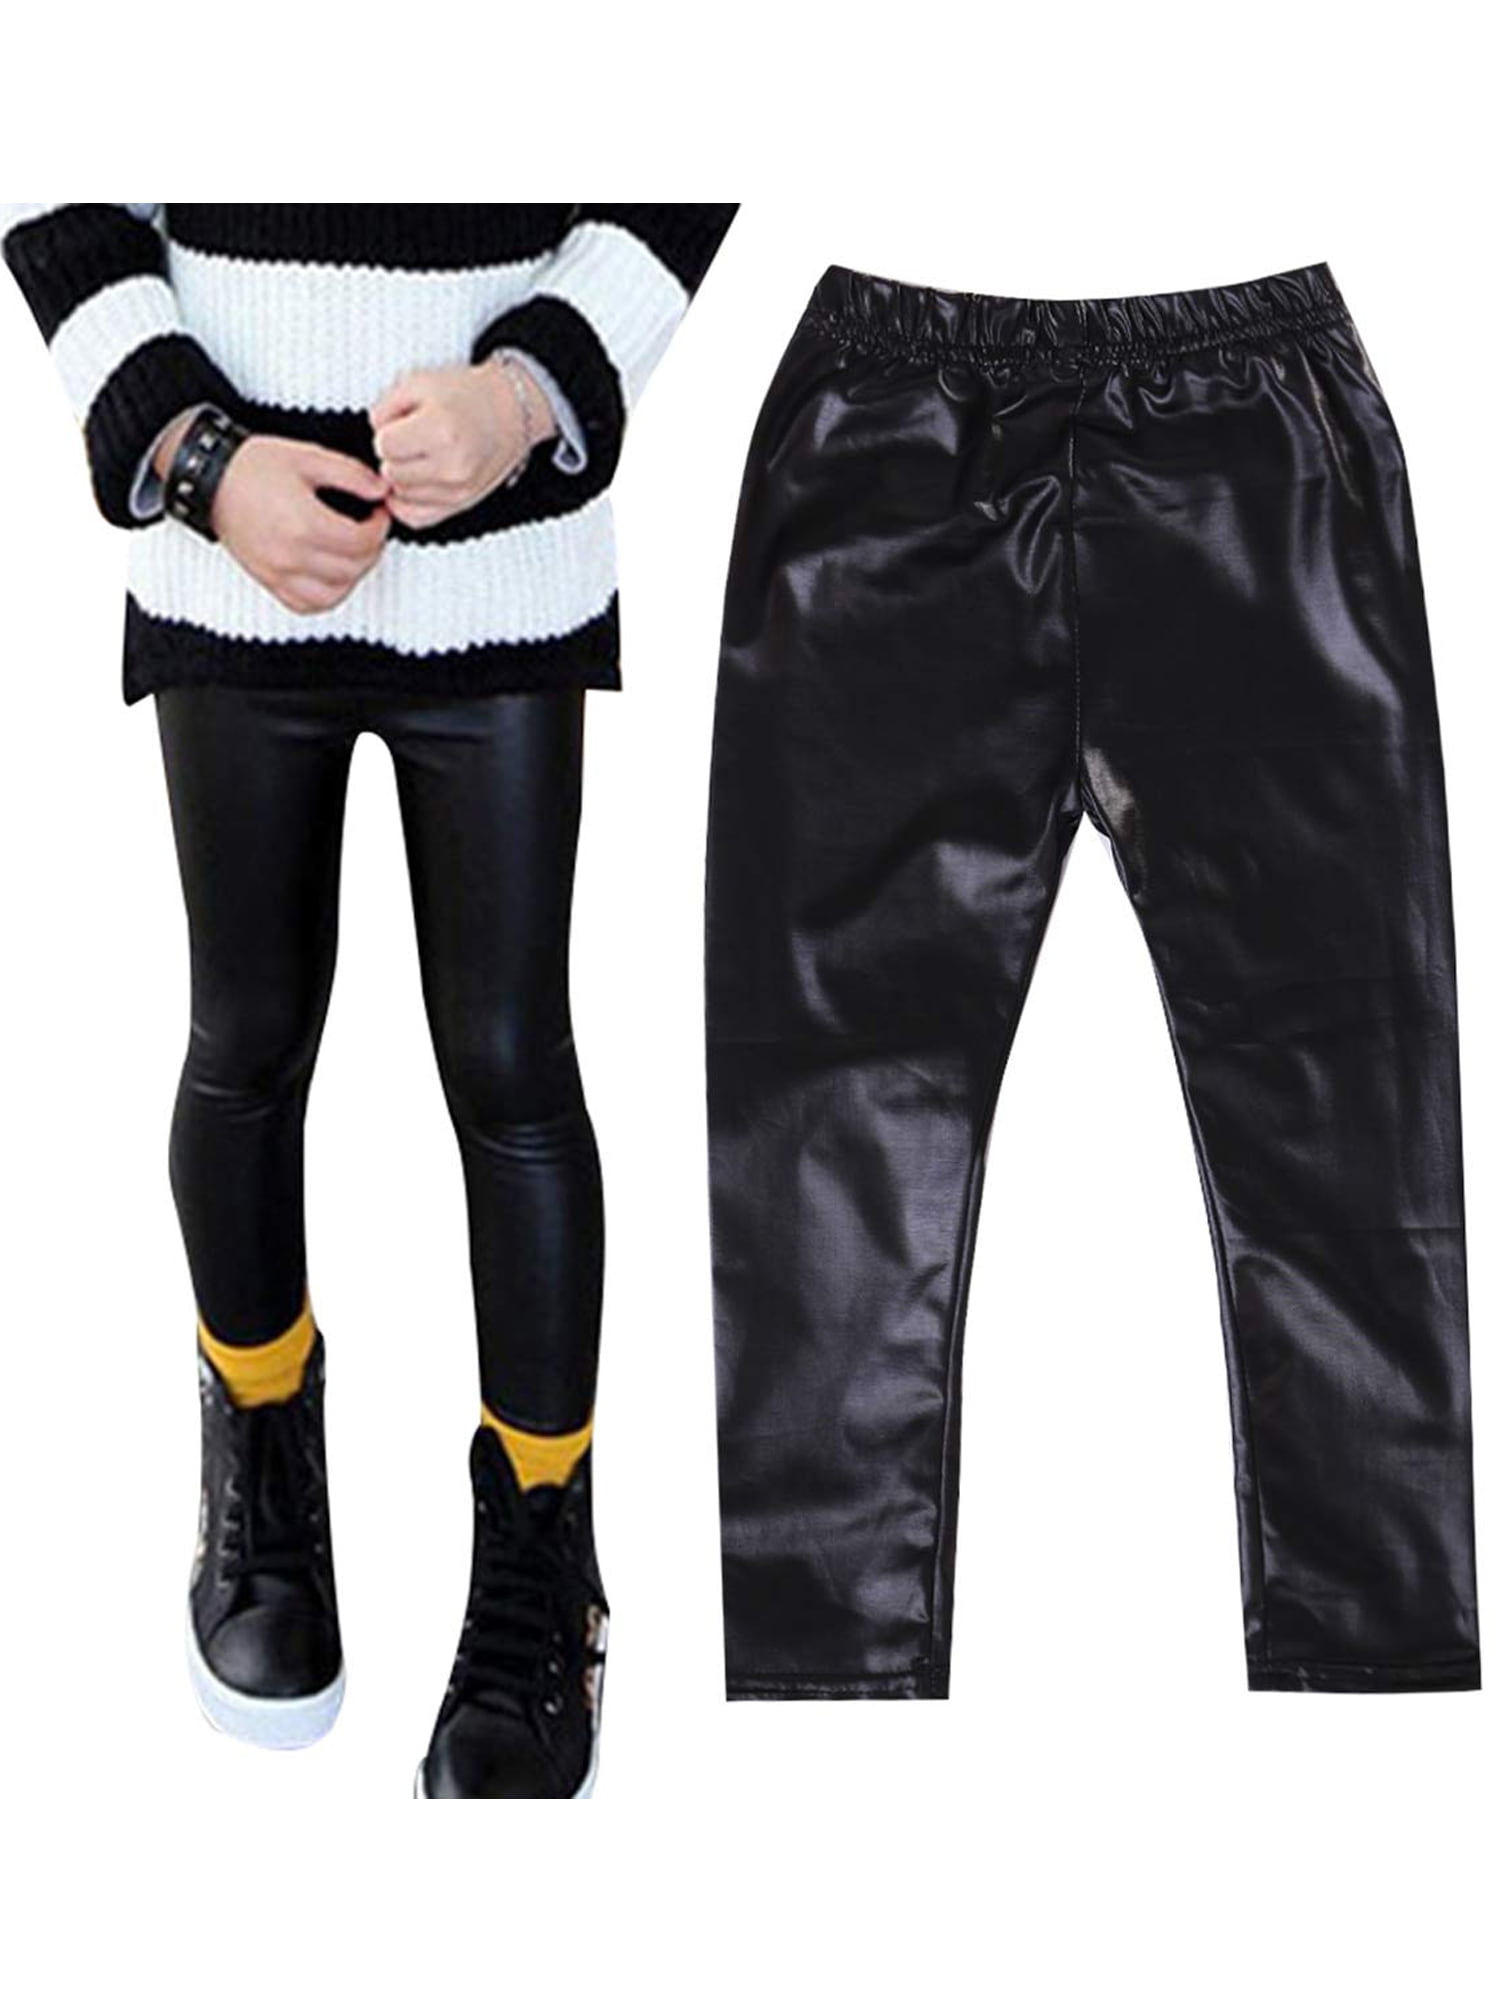 Lanpan Fashion Baby Girls Boys Imitation leather Legging Pants